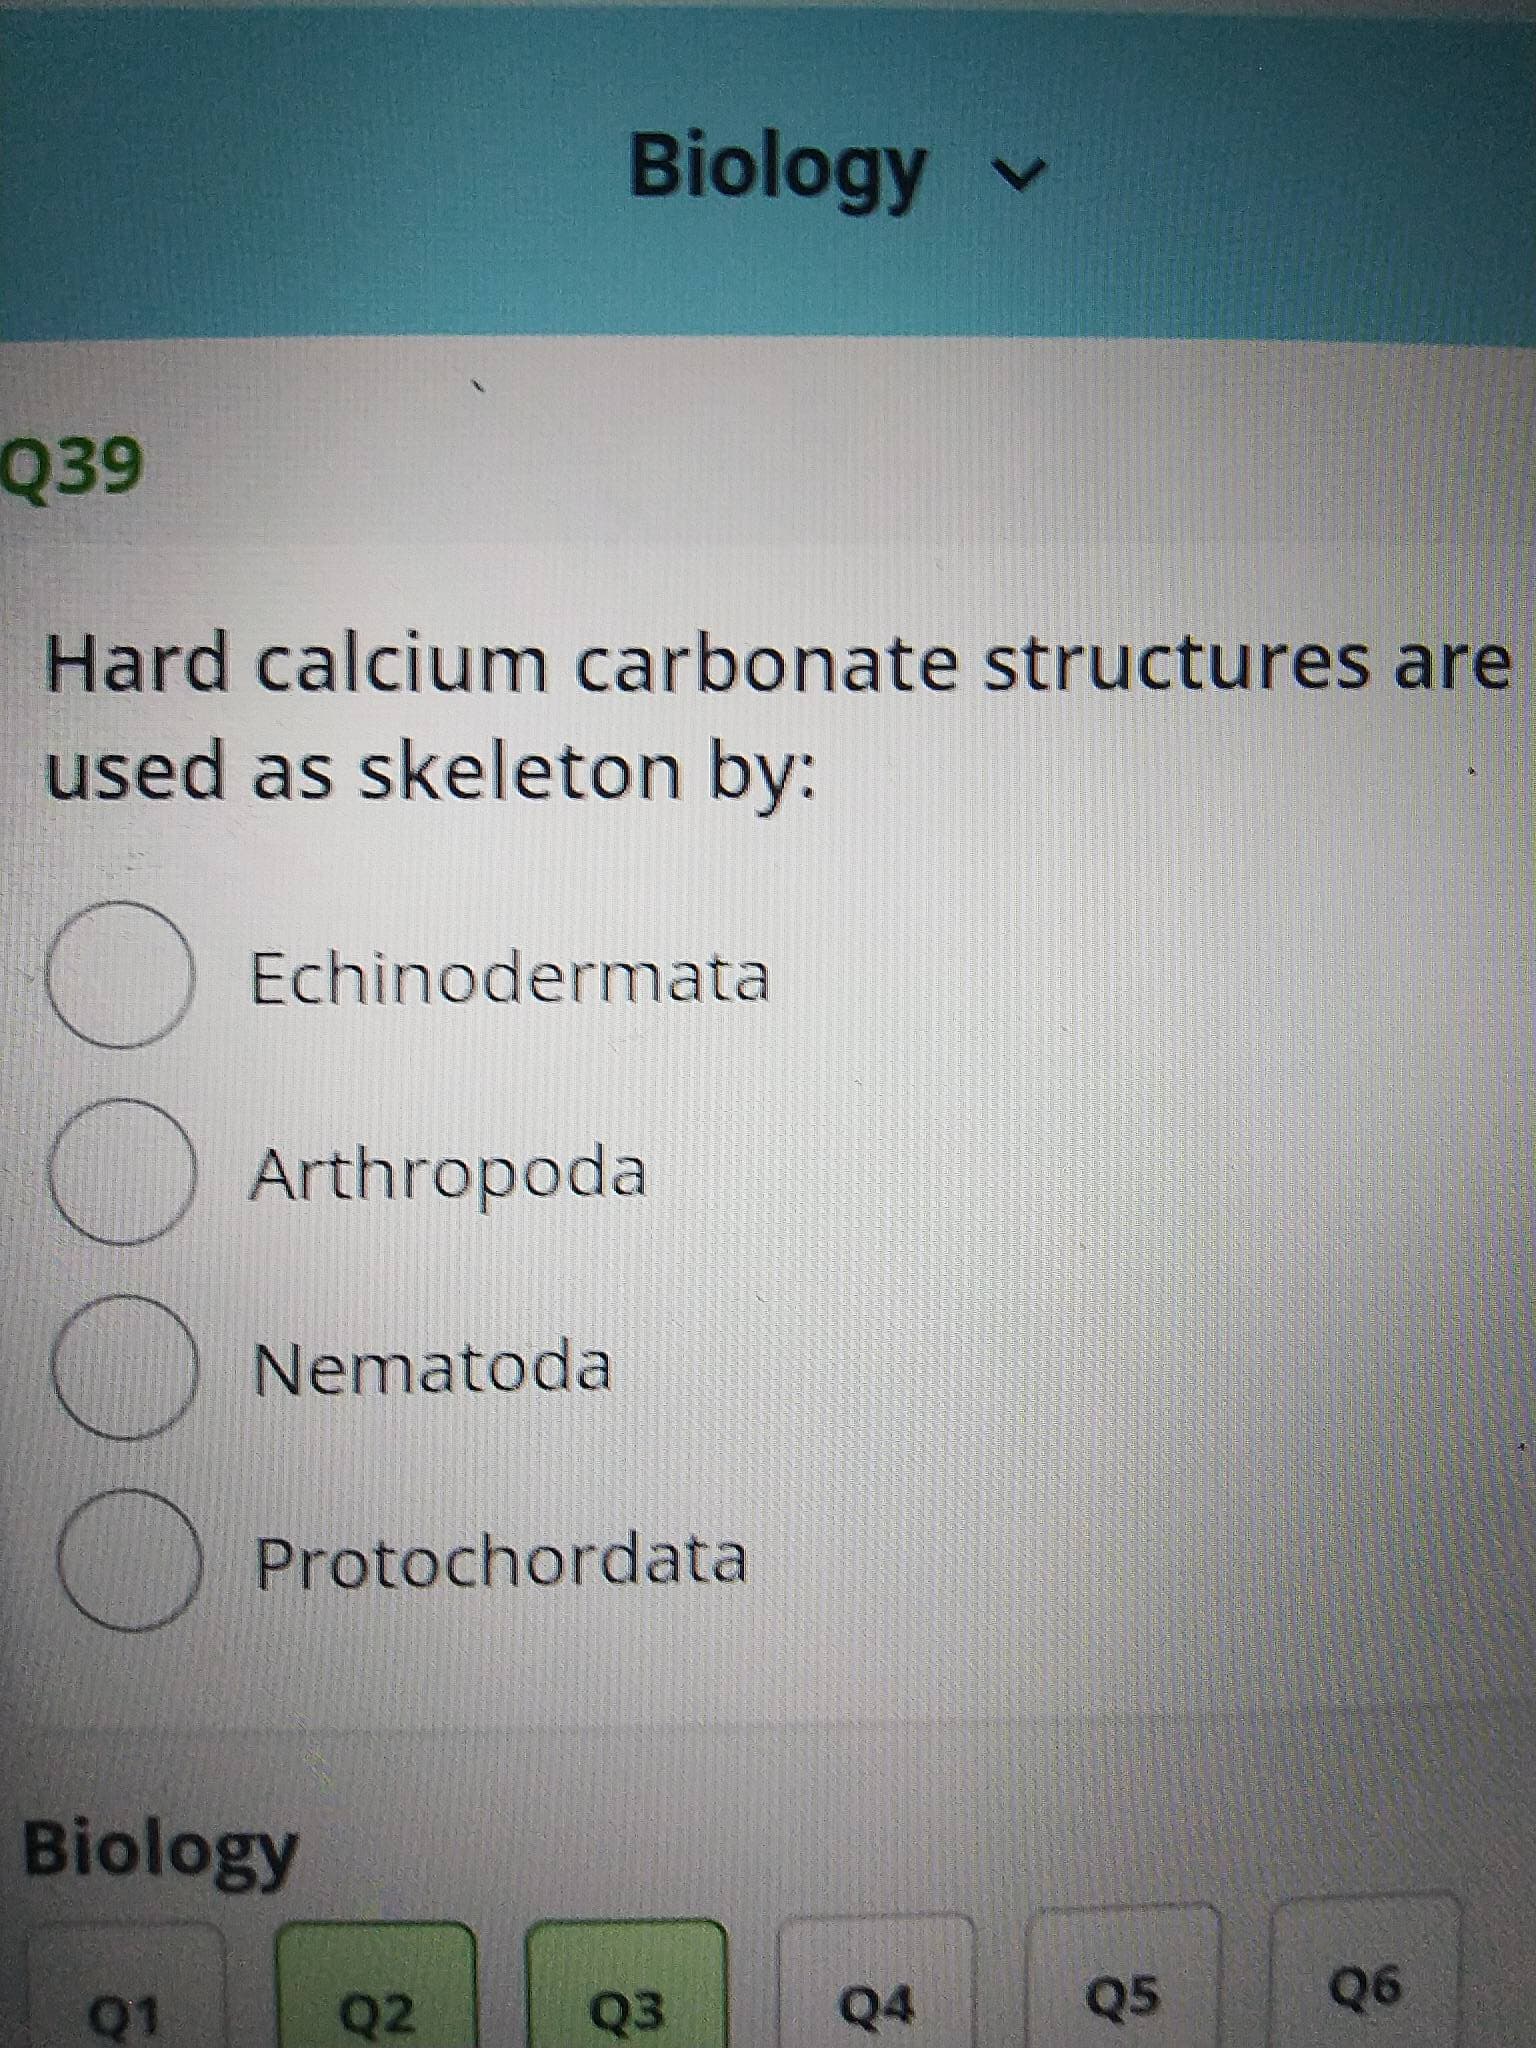 00OO
Biology v
Q39
Hard calcium carbonate structures are
used as skeleton by:
Echinodermata
Arthropoda
Nematoda
Protochordata
Biology
Q1
Q2
Q3
Q4
Q5
90
